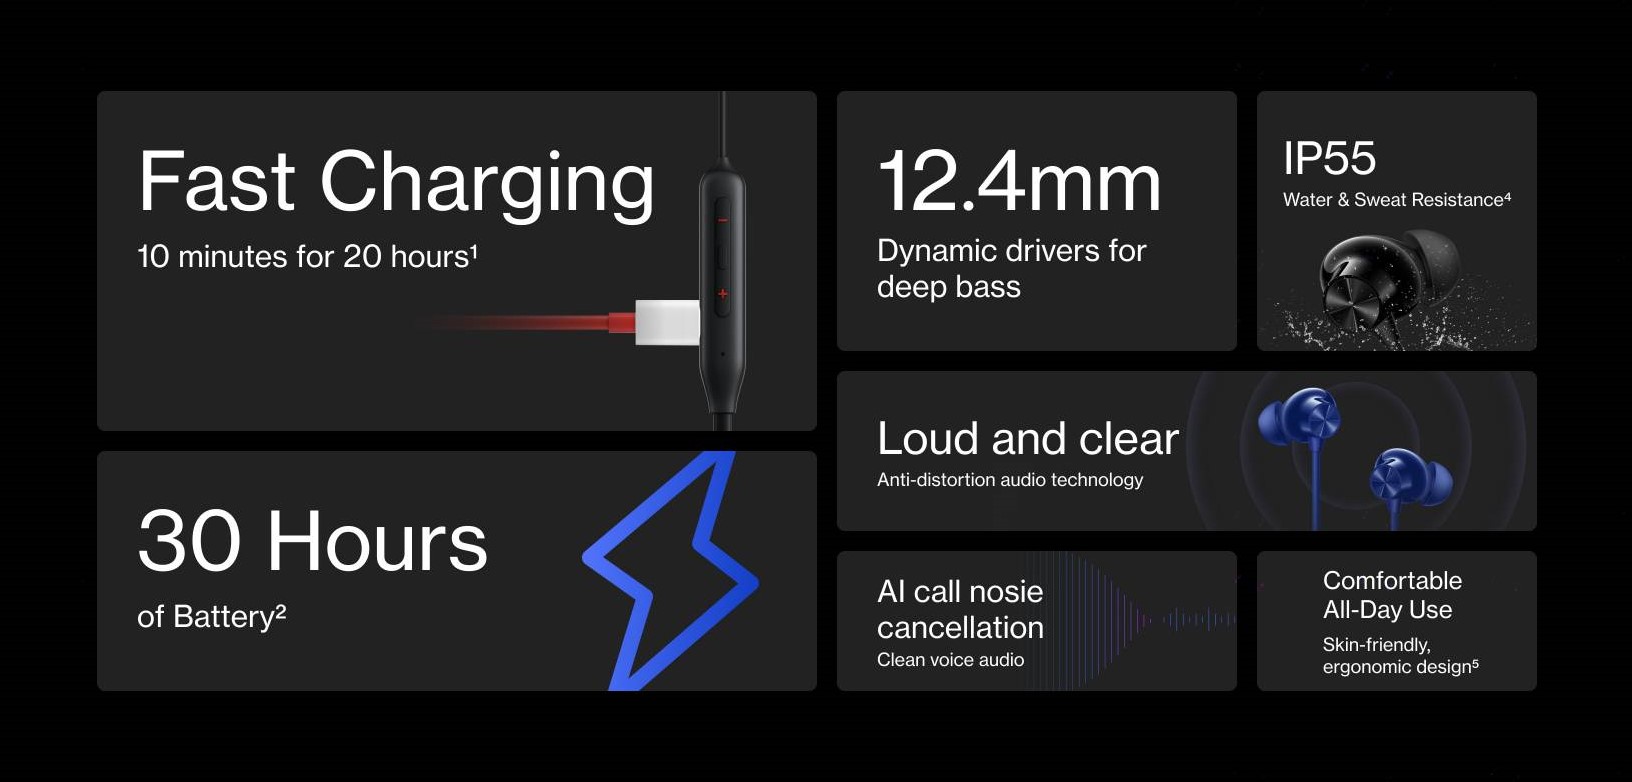 OnePlus Bullets Wireless Z2